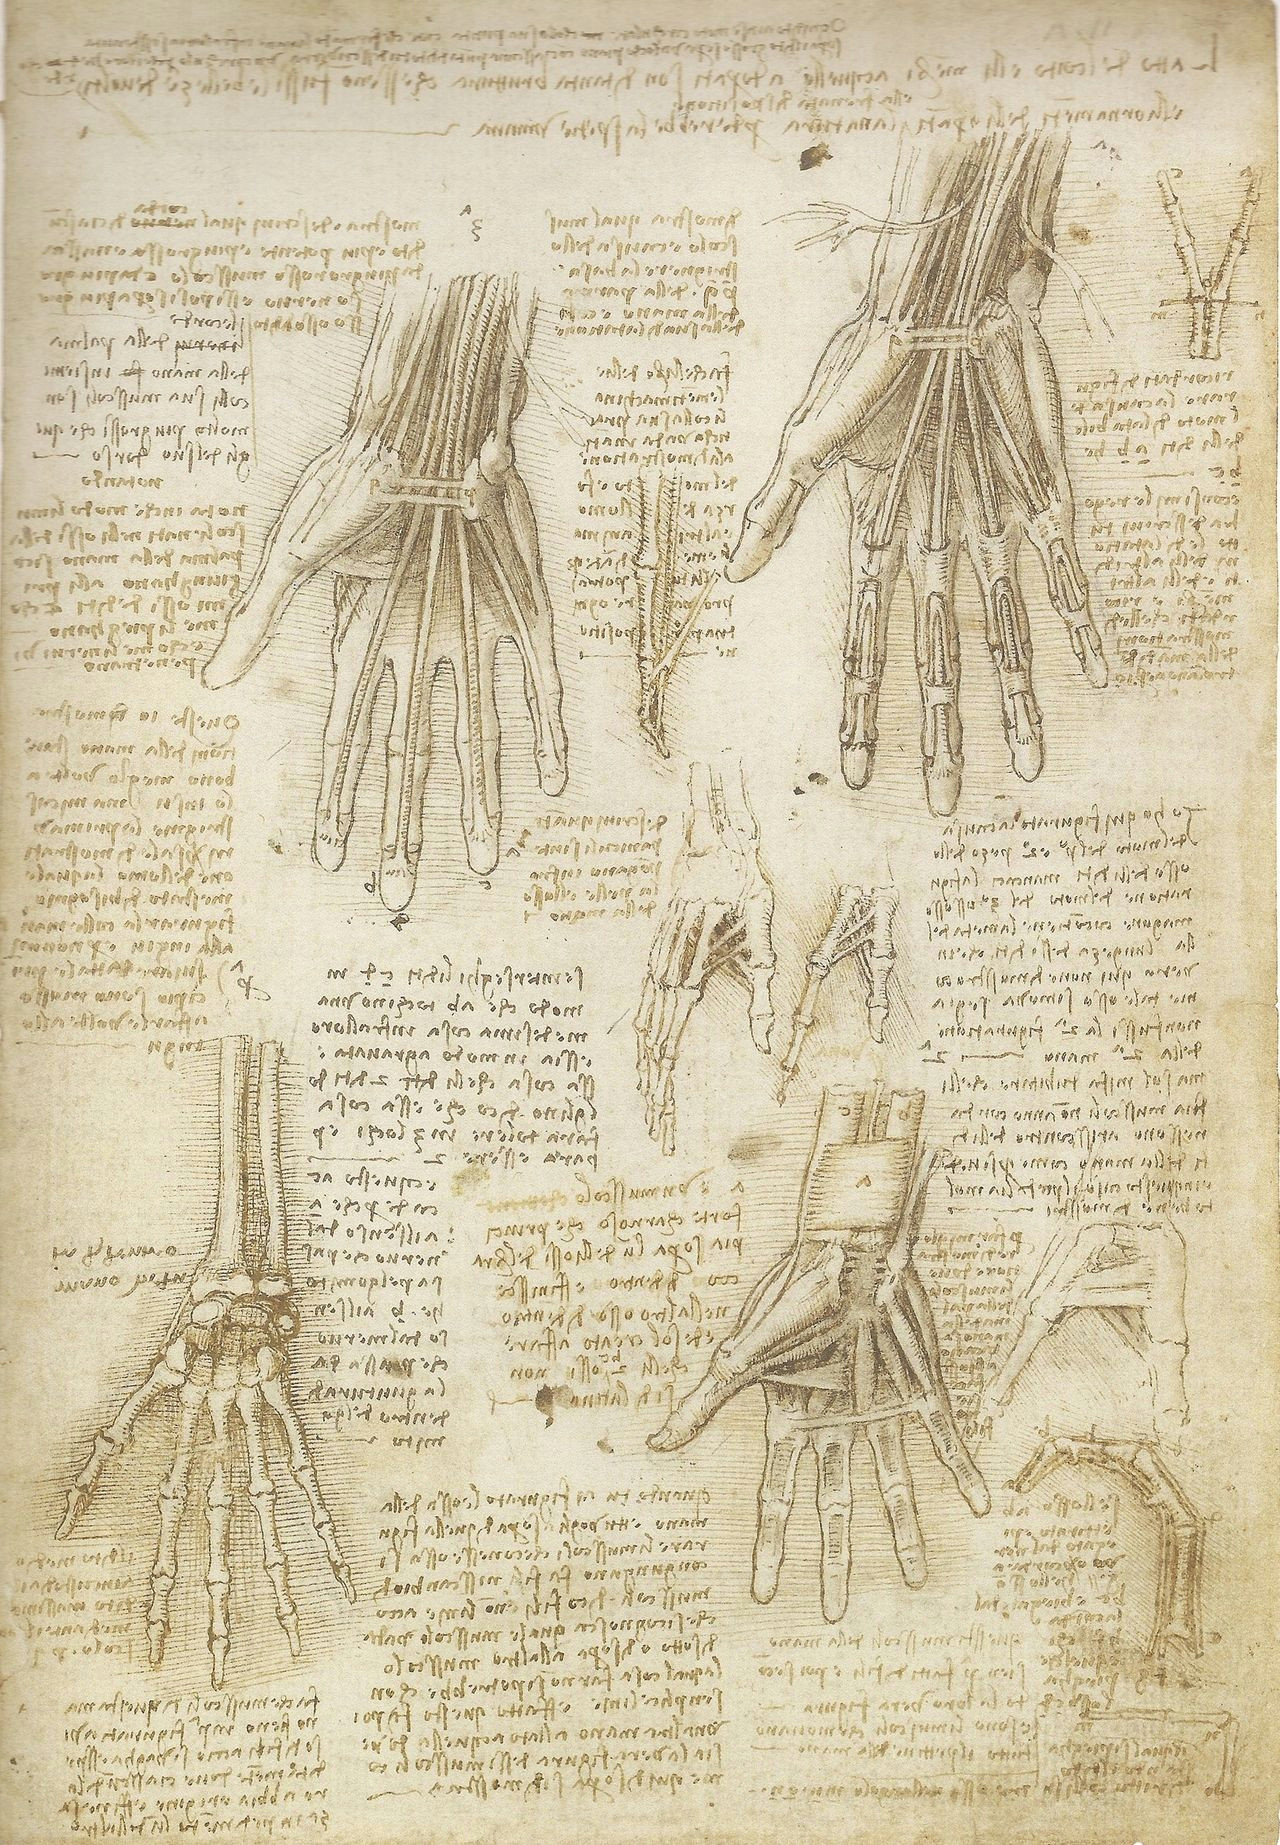 Da Vinci Drawings Of Hands Pin by Matthew Phoenix On Da Vinci Pinterest Drawings